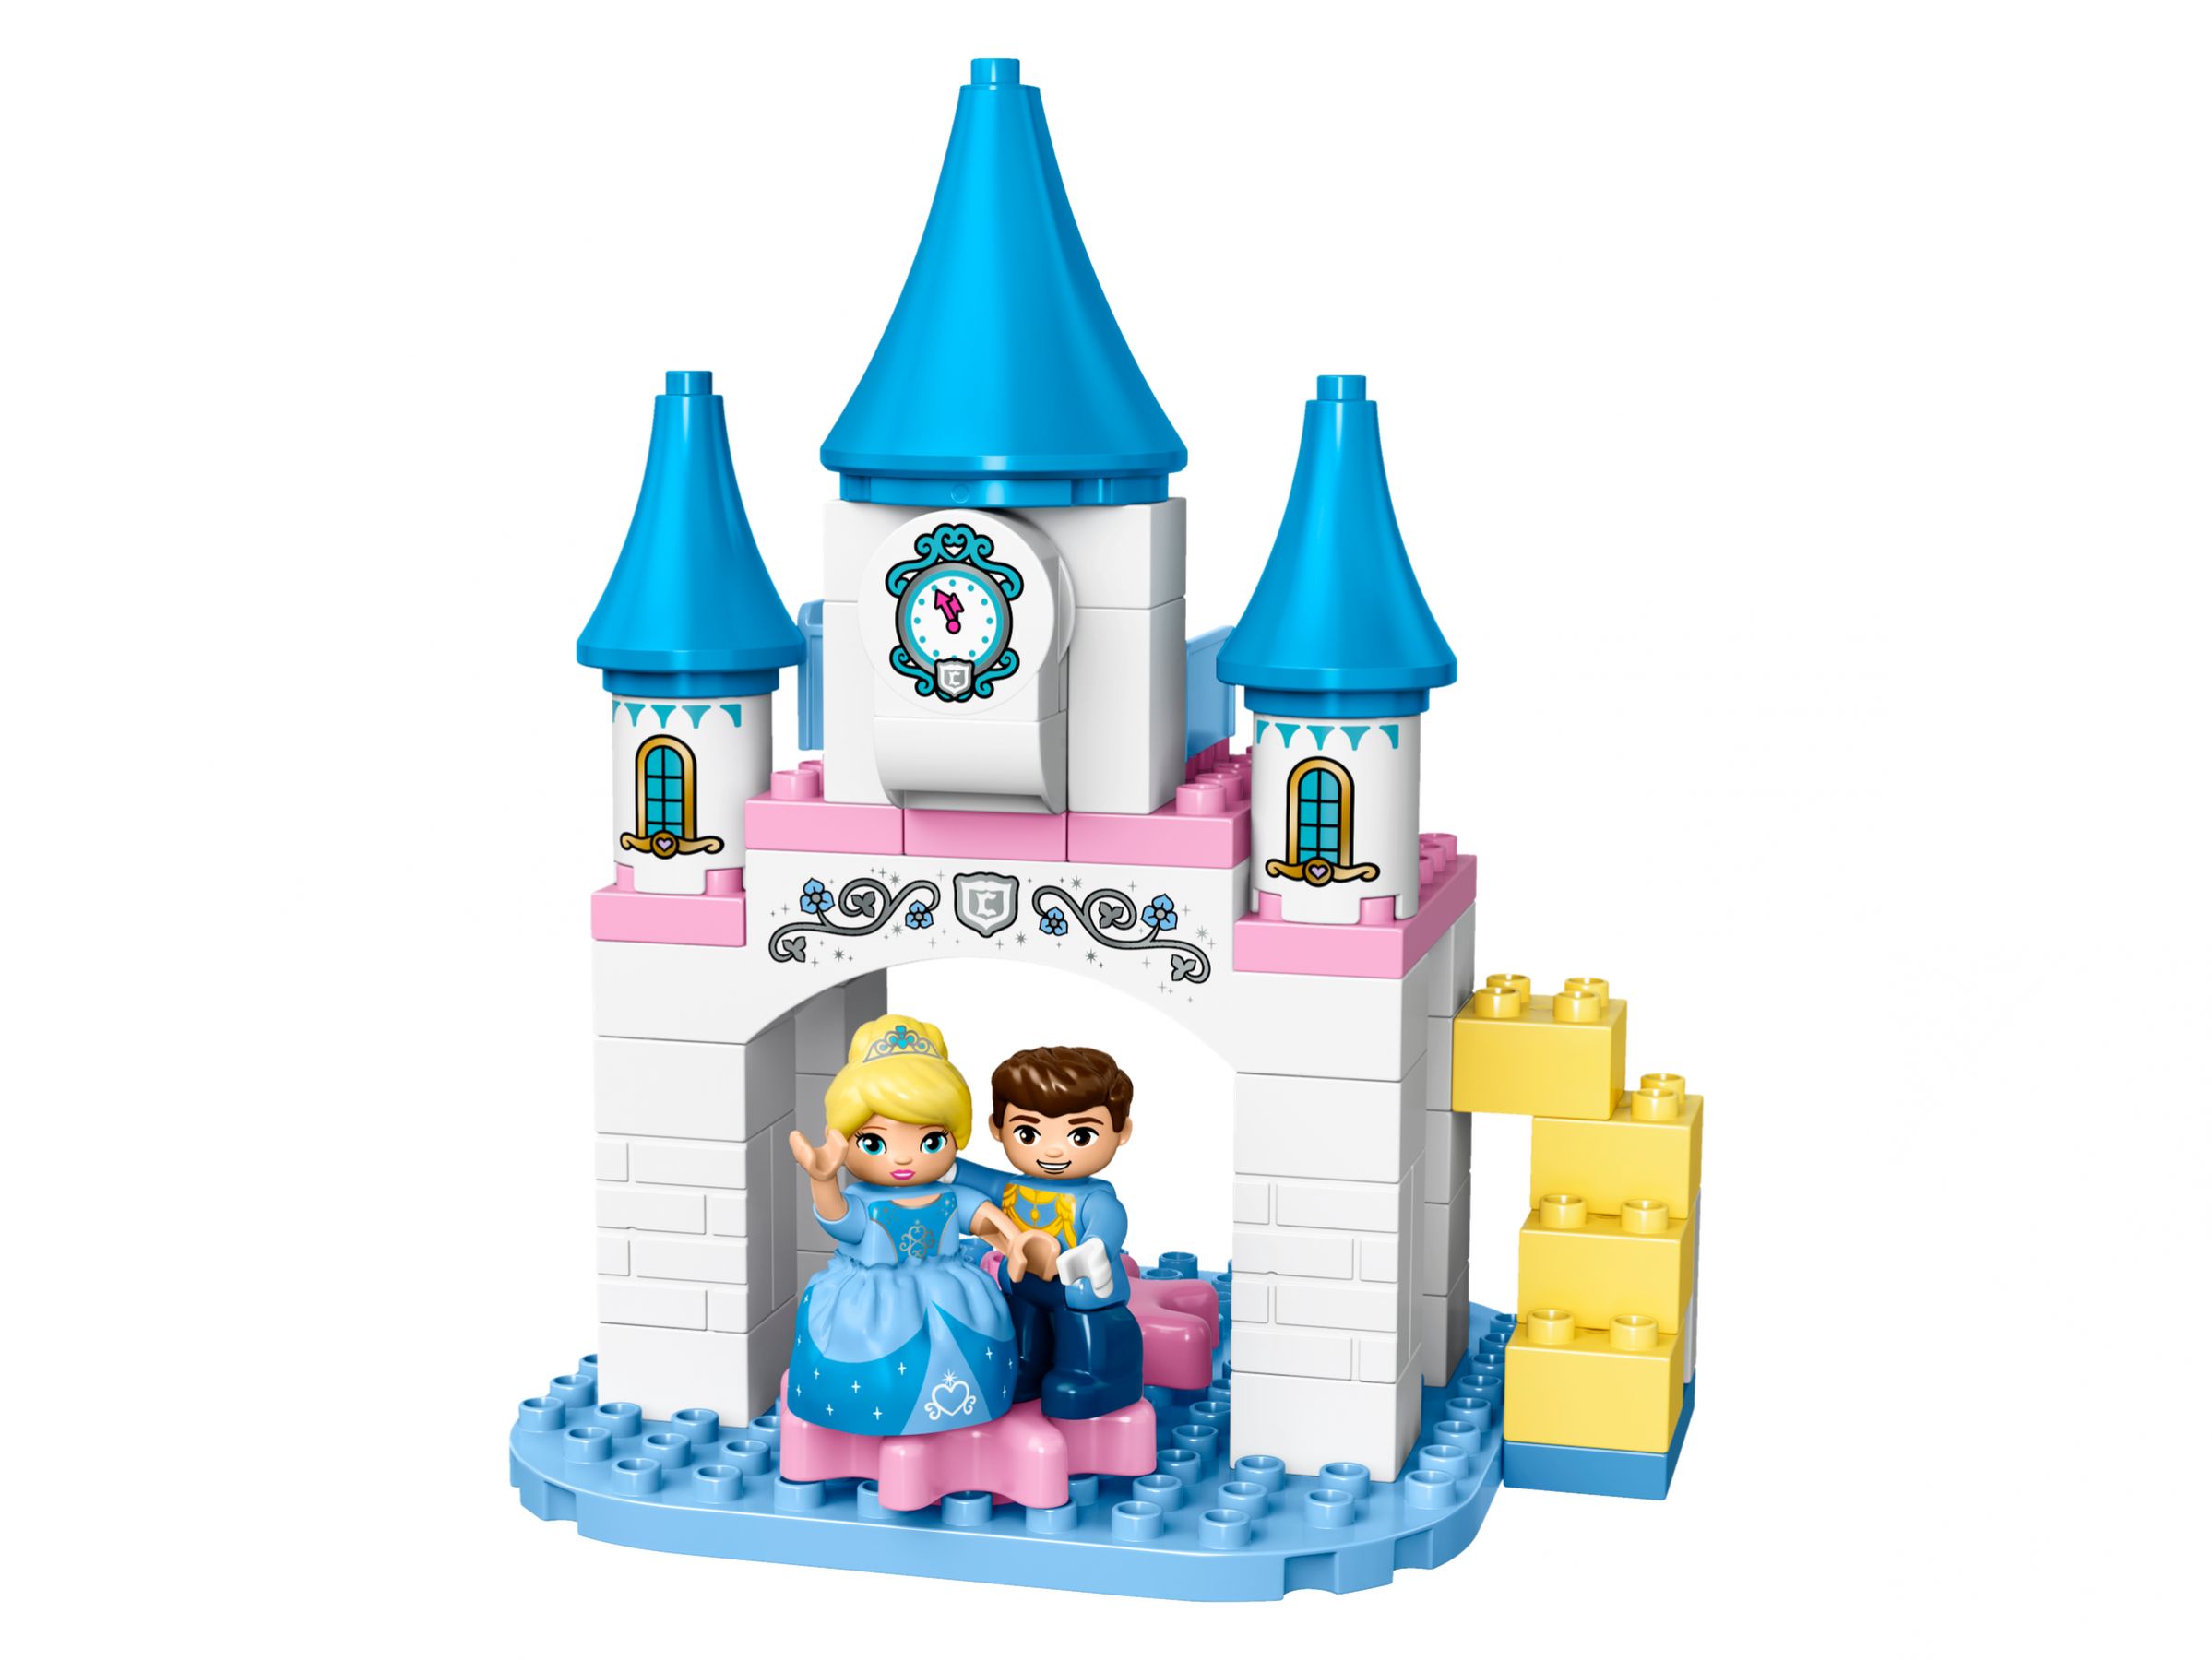 LEGO Duplo 10855 Cinderellas Märchenschloss LEGO_10855_alt2.jpg